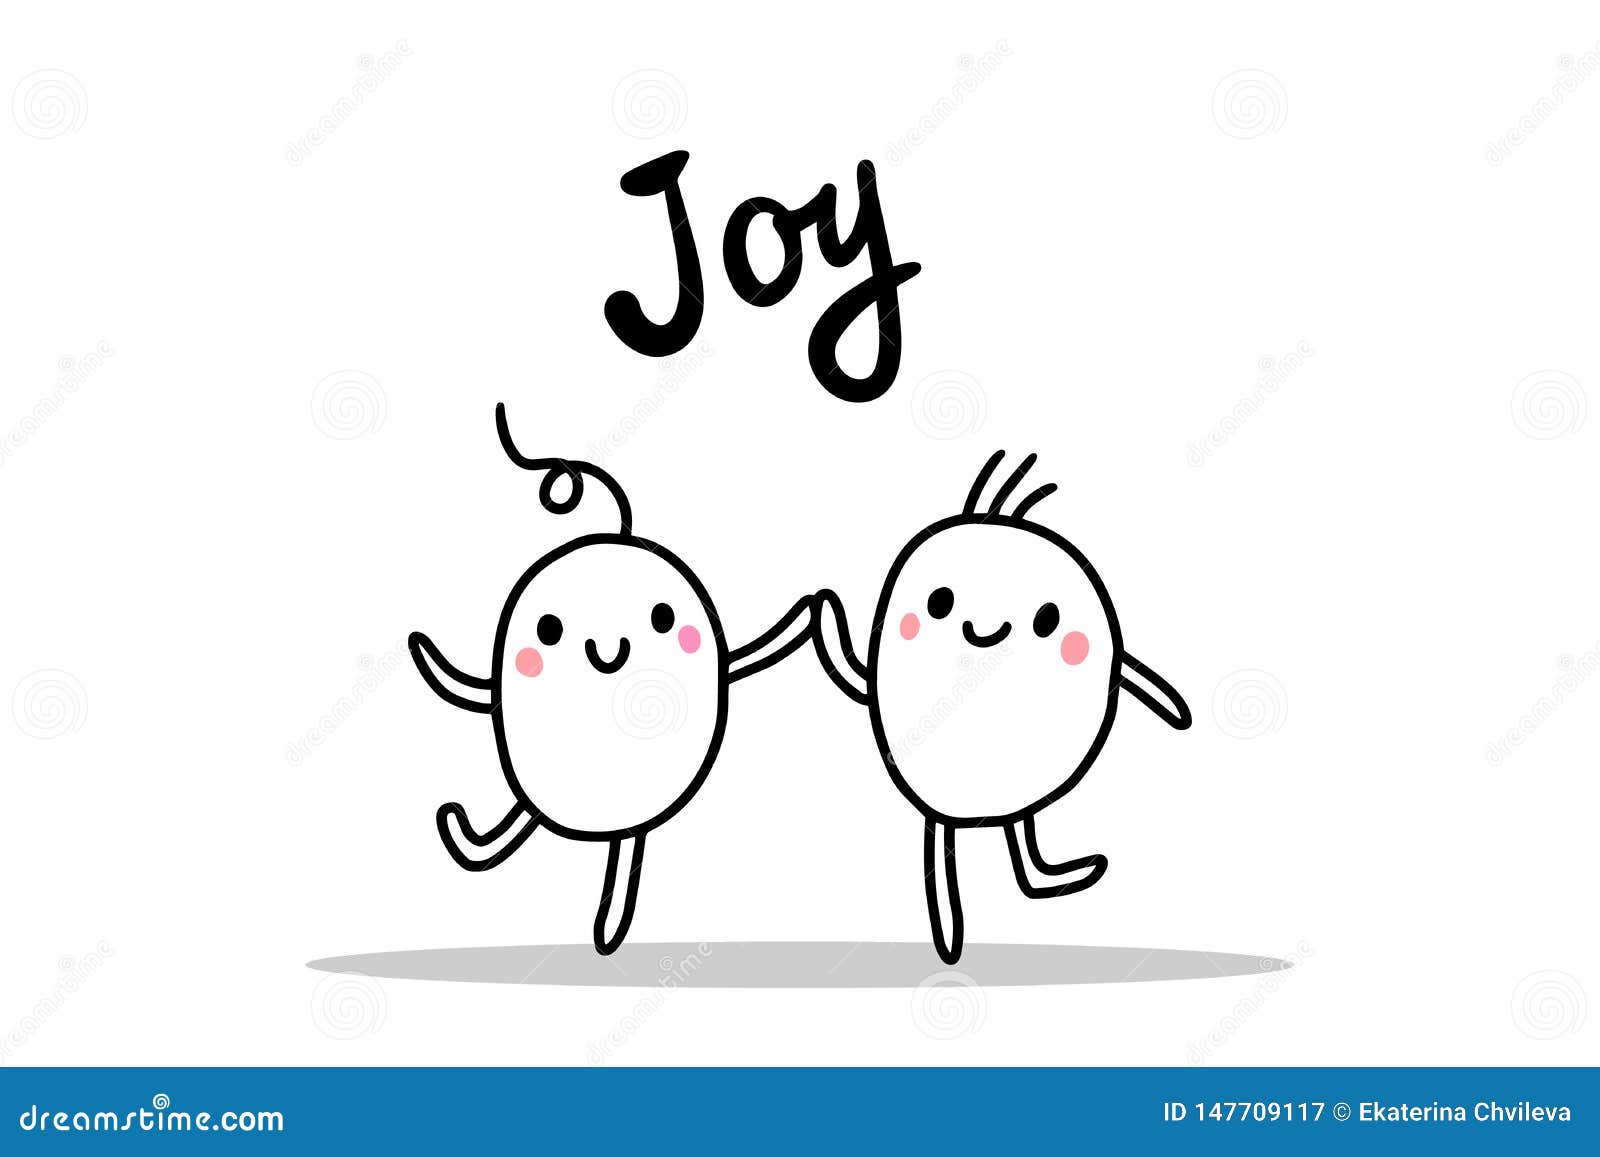 Joy Hand Drawn Cartoon Illustration with Two Friends Happy Stock  Illustration - Illustration of minimalism, prints: 147709117